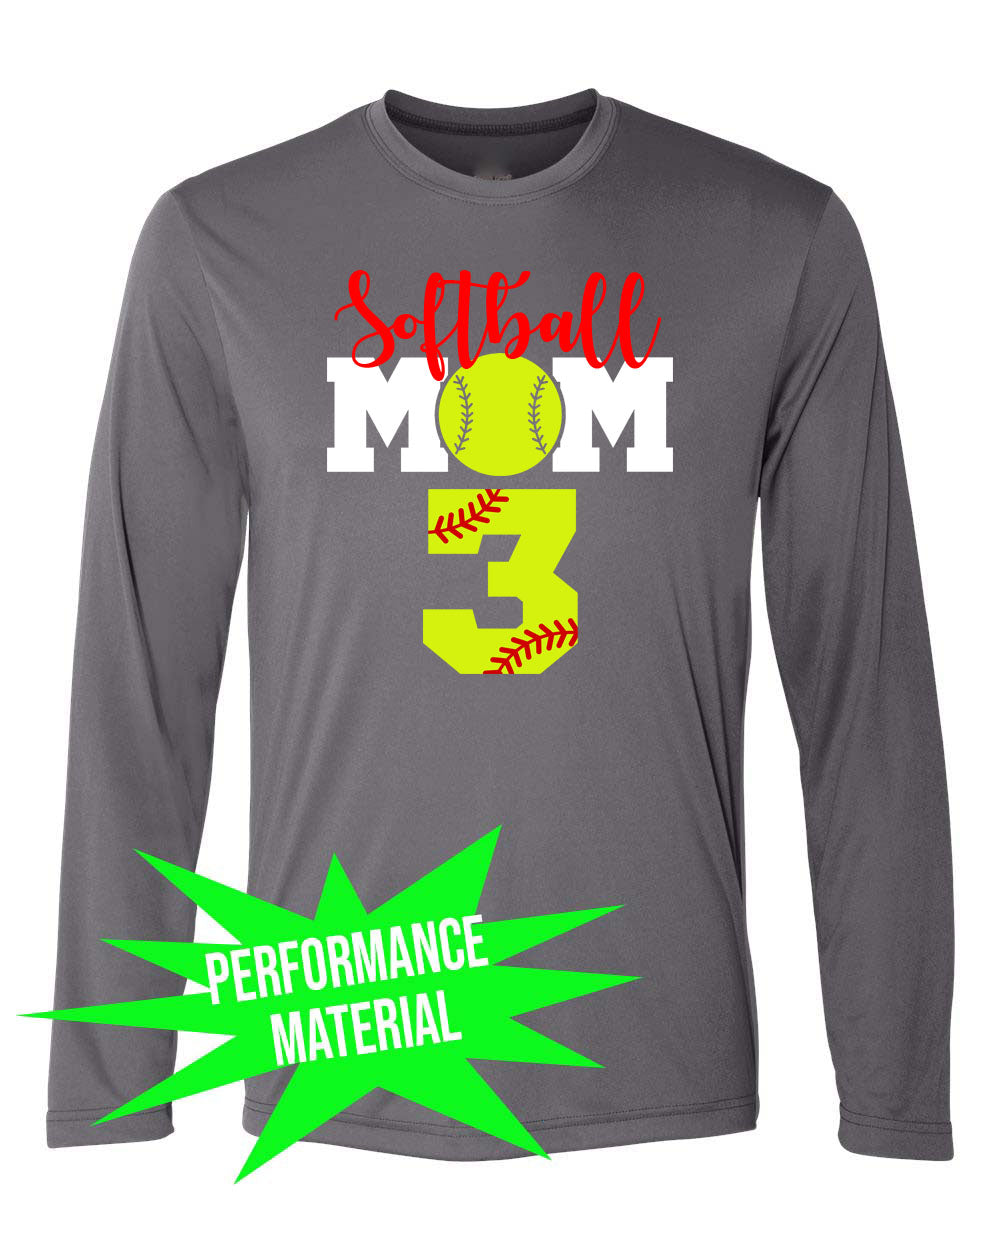 High Point Softball Performance Material Design 6 Long Sleeve Shirt